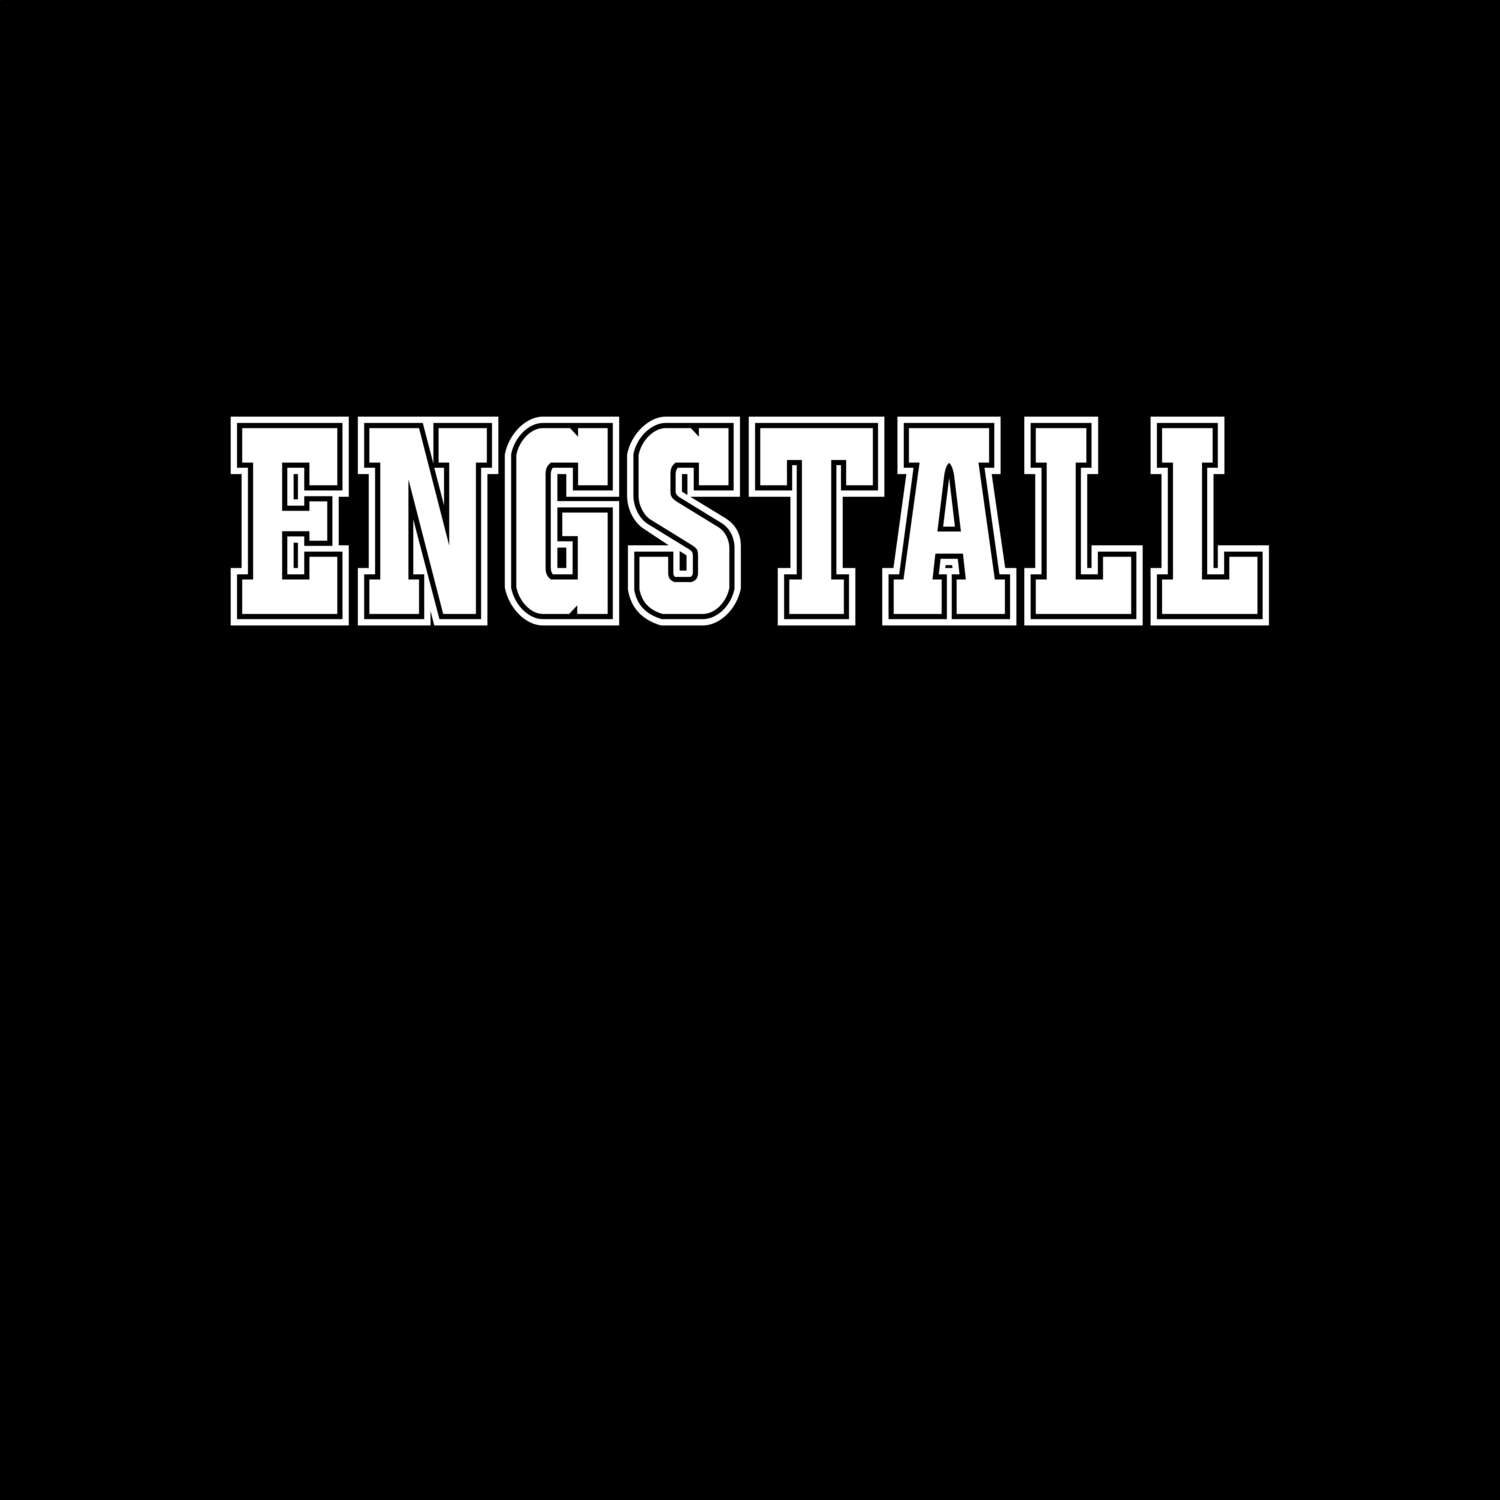 Engstall T-Shirt »Classic«